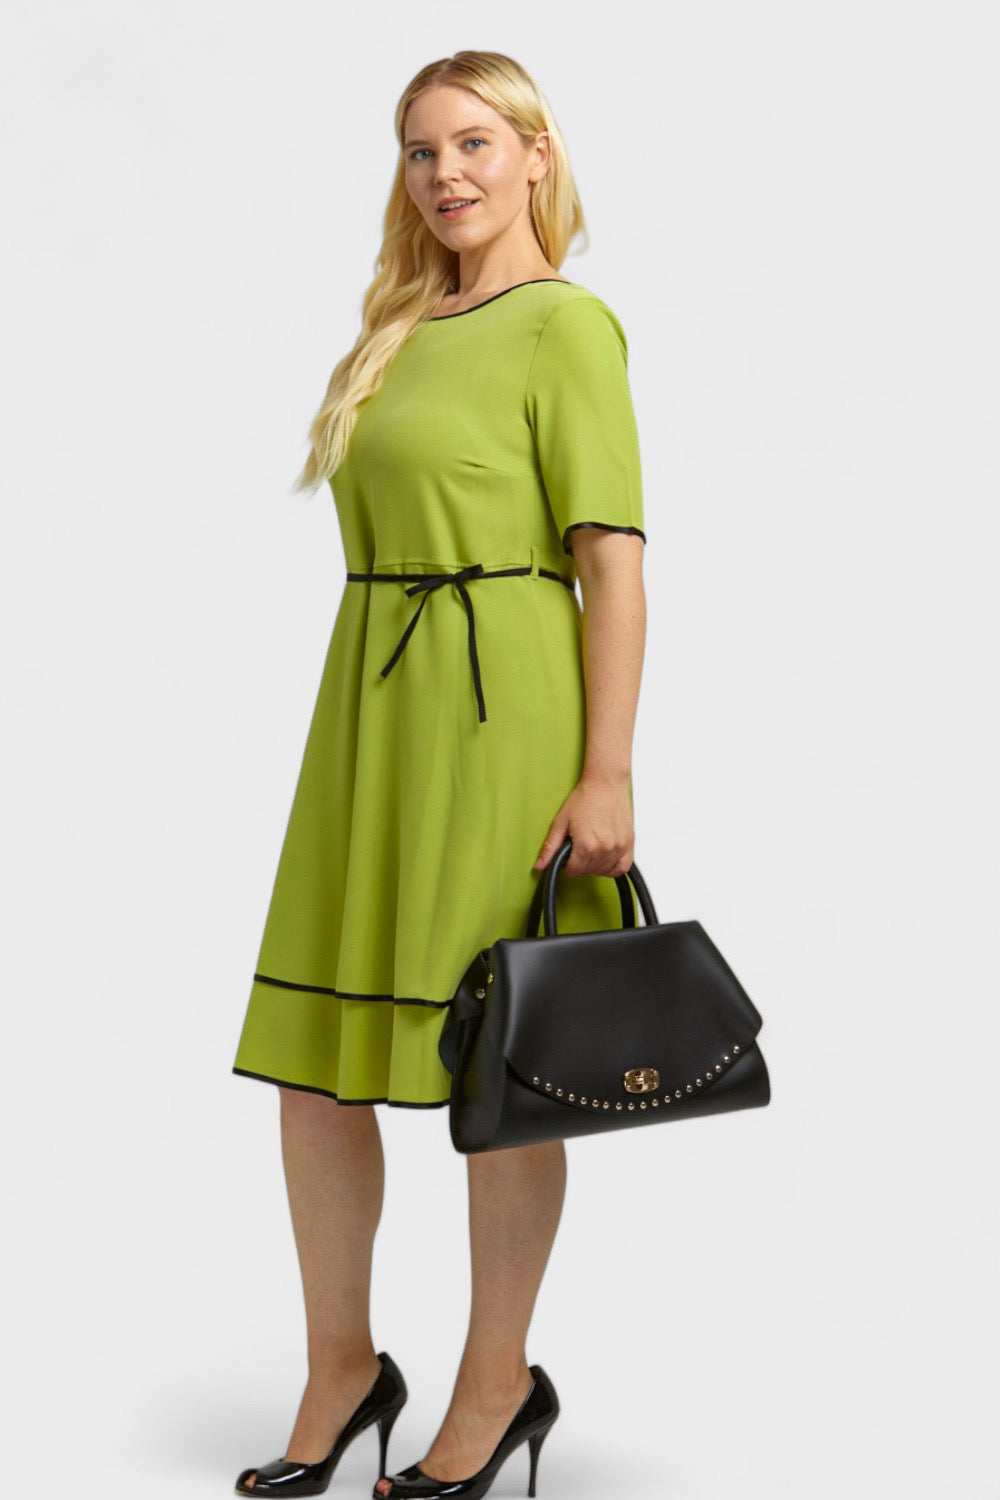 Angelia Plus Size Pistachio Green Ruffled Dress by Oltretempo Italian Women's Fashion Paired with Capri Black Studded Medium Bag